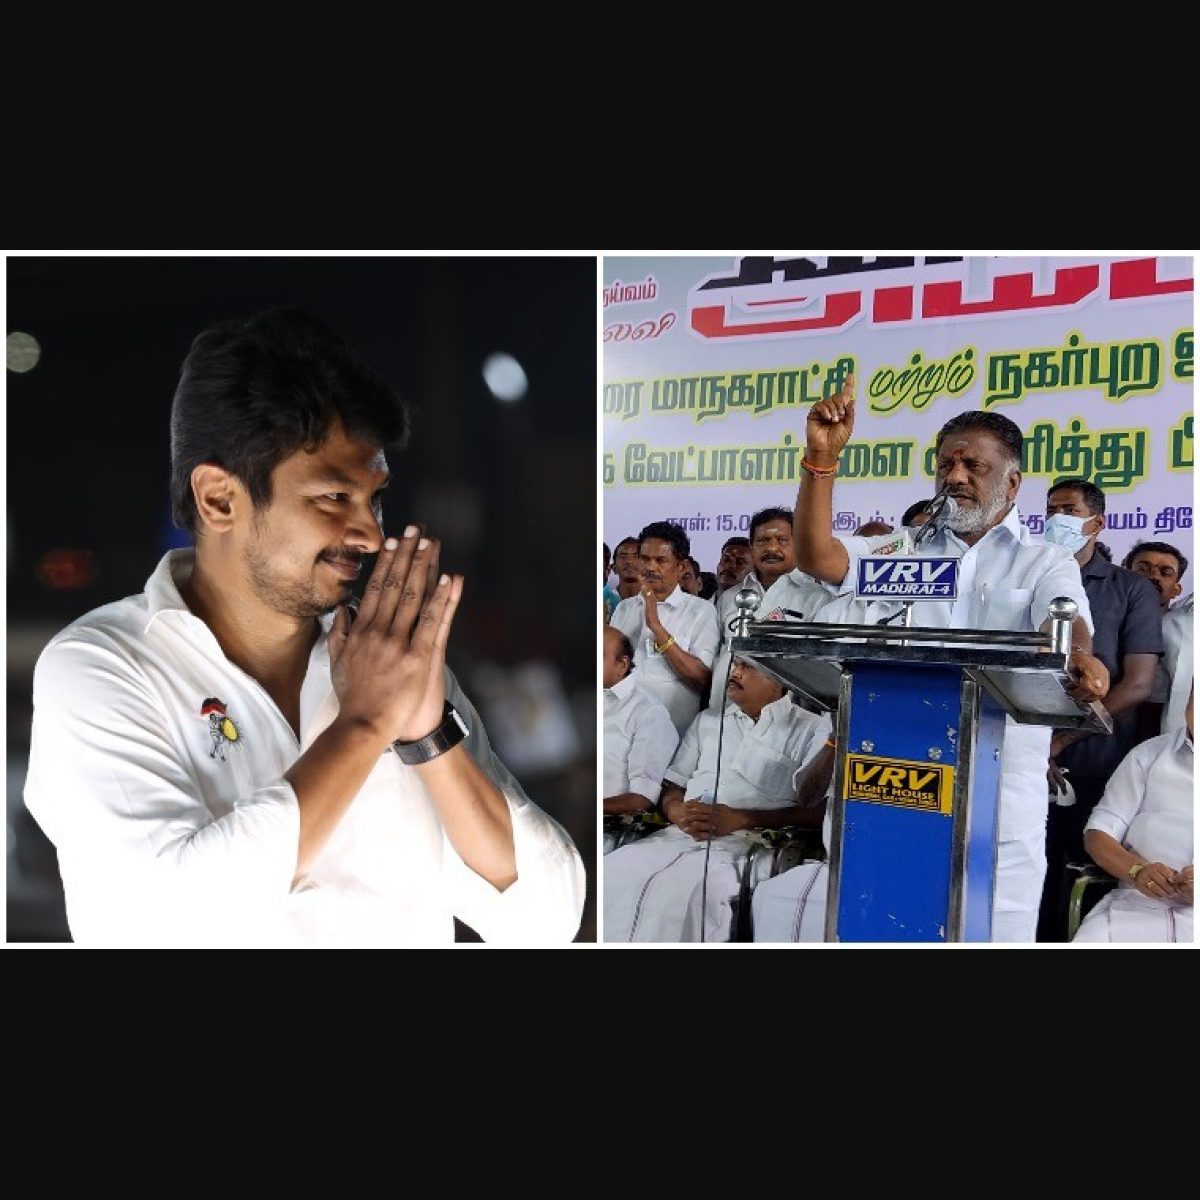 Tamil Nadu: Stage set for corporation elections